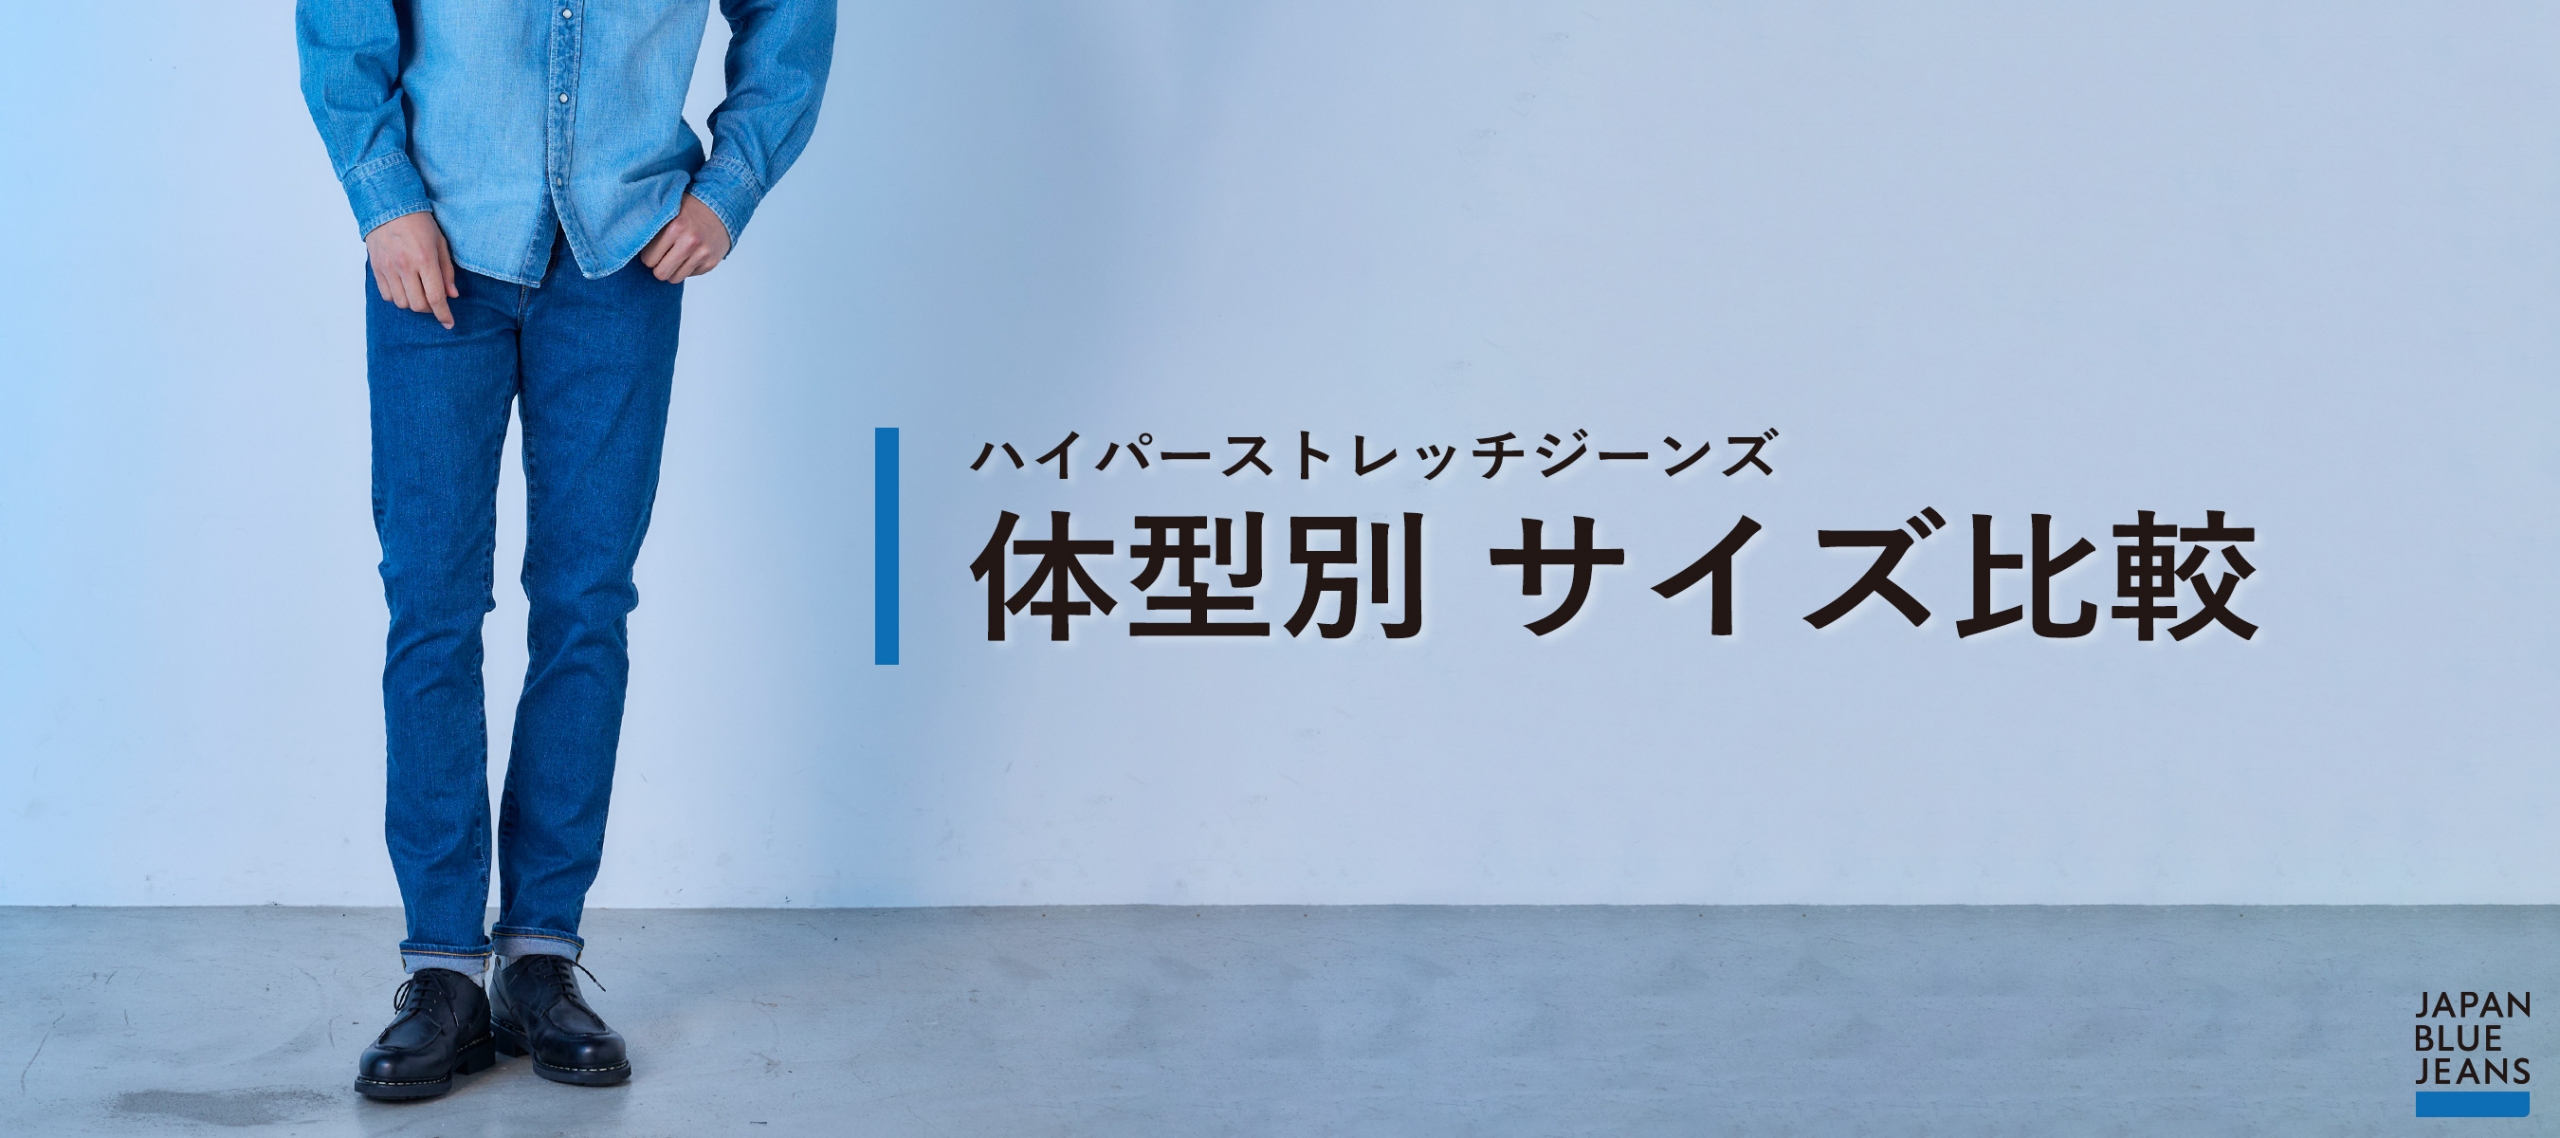 JAPAN BLUE JEANS ハイパーストレッチジーンズ -体型別 サイズ比較- PC版